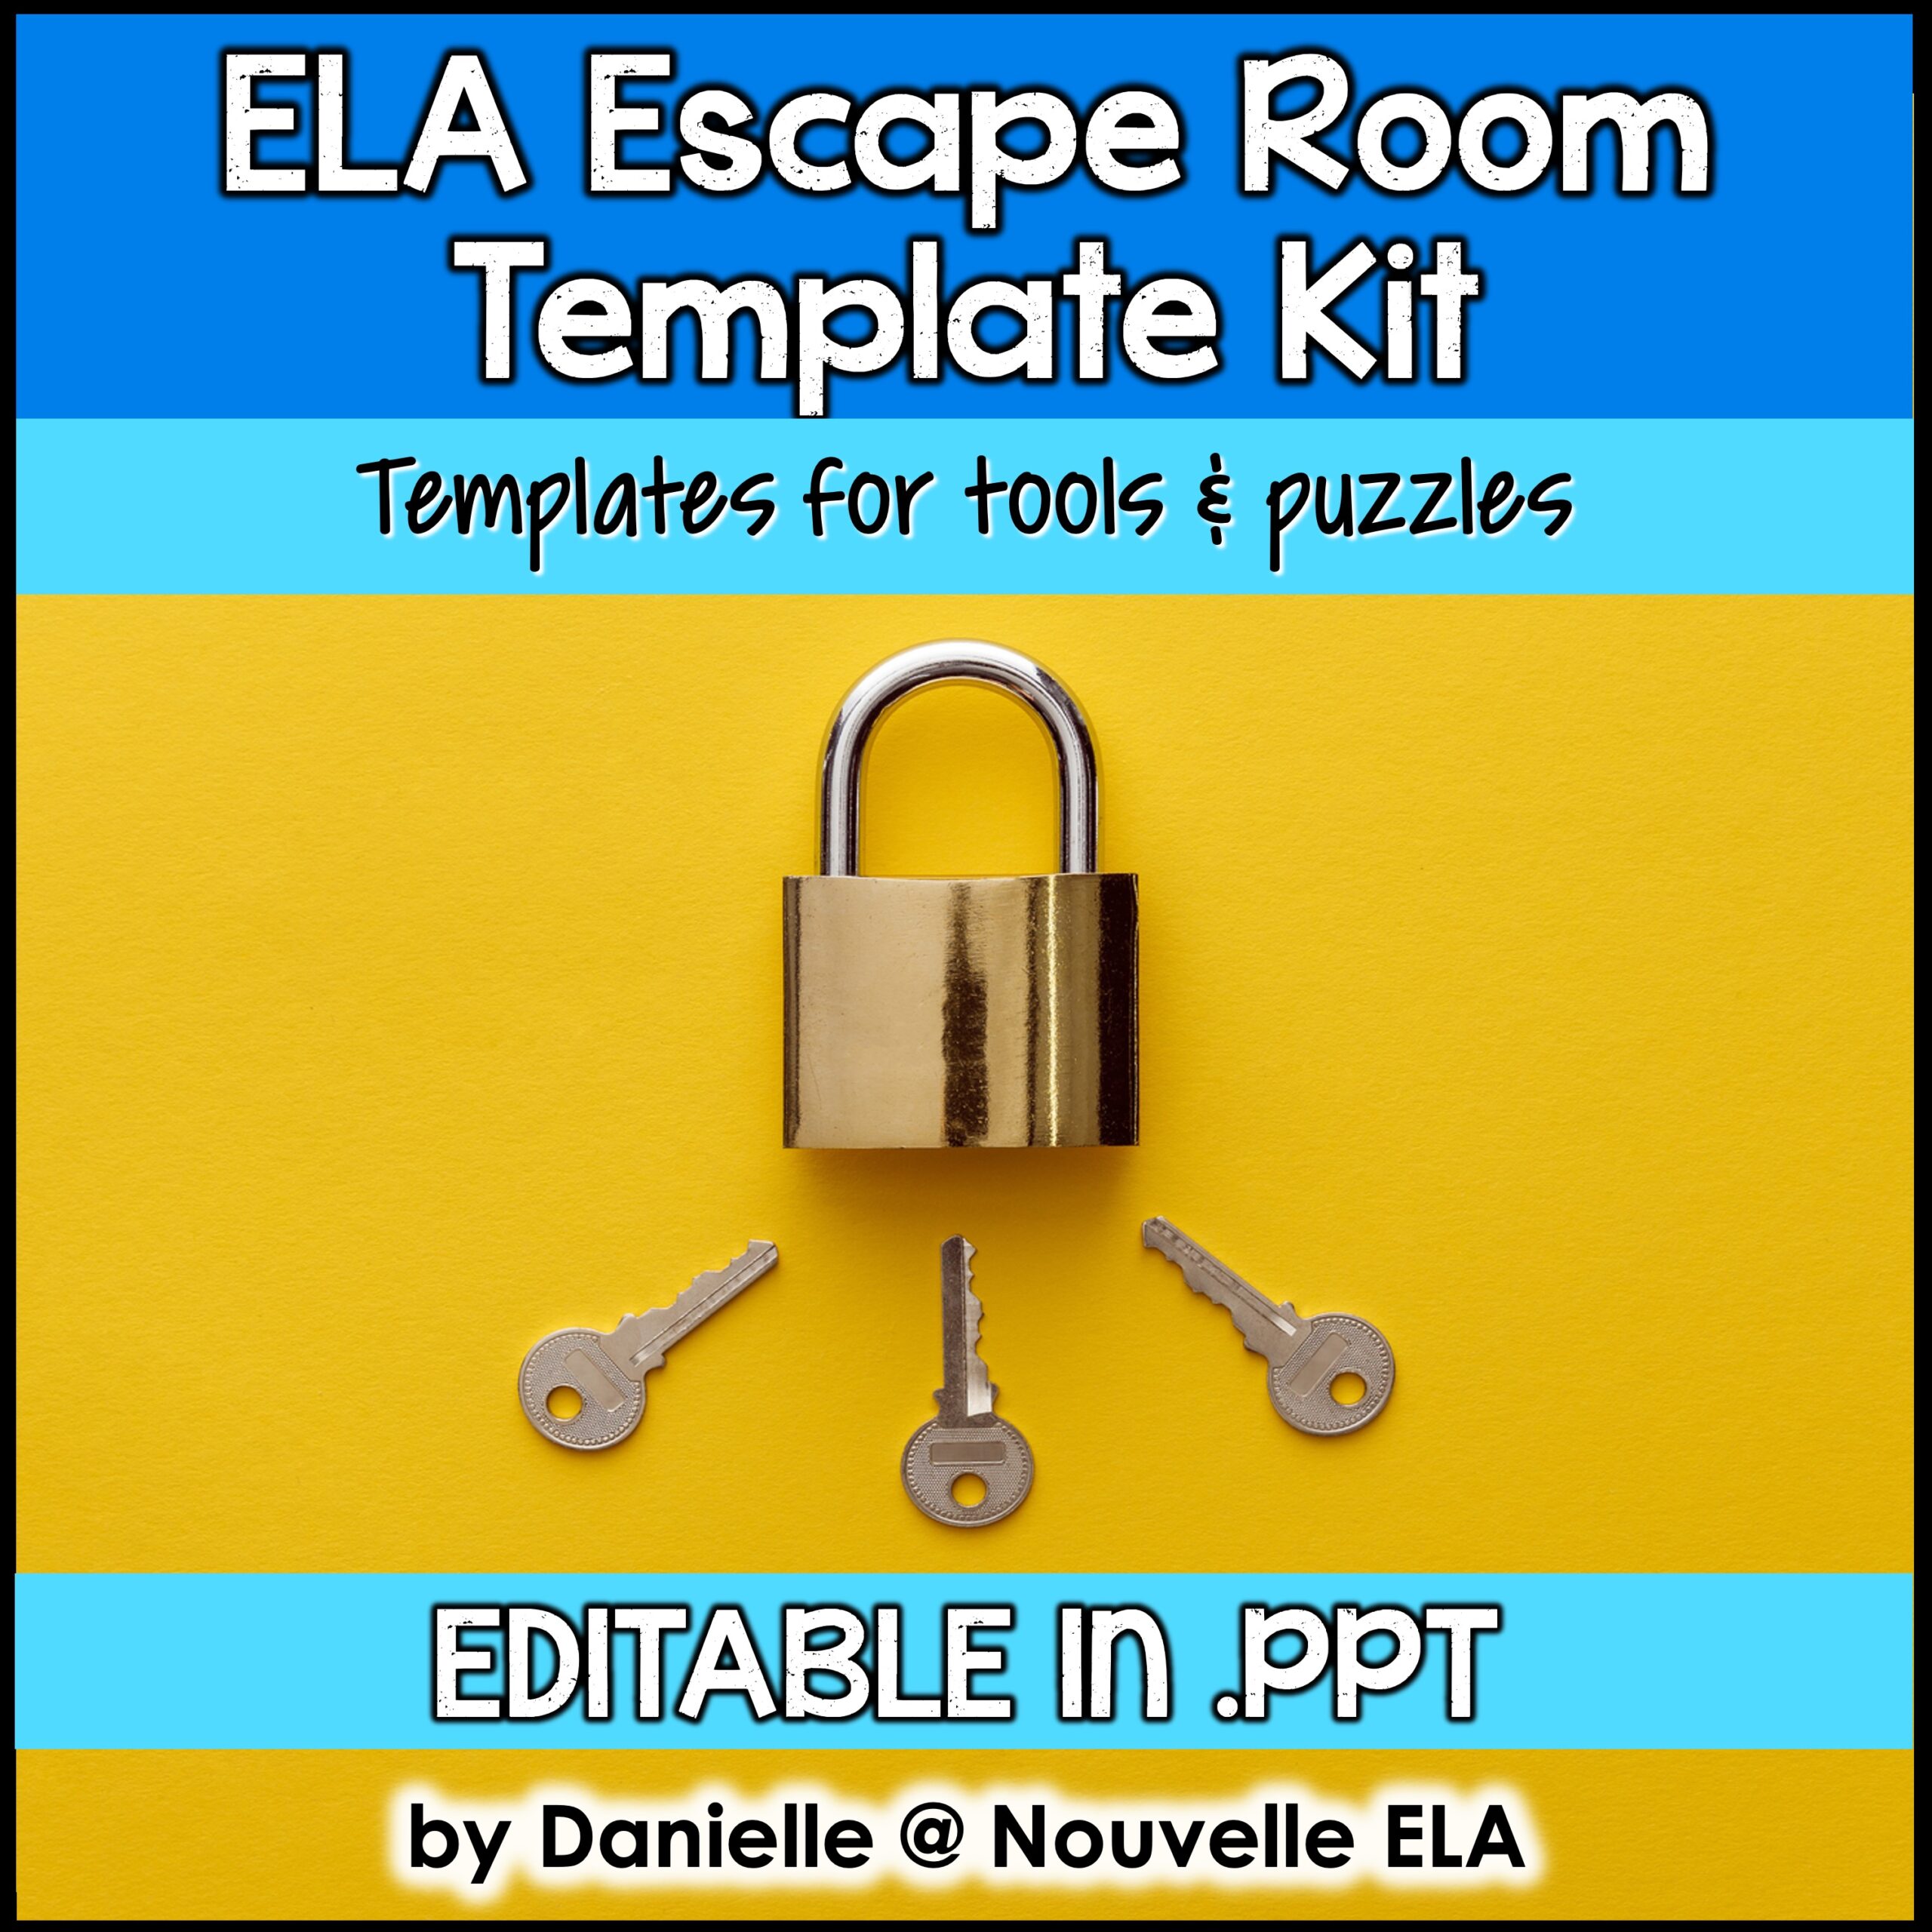 https://teachnouvelle.com/wp-content/uploads/2019/10/ELA-Escape-Room-Template-Kit-Cover-scaled.jpg